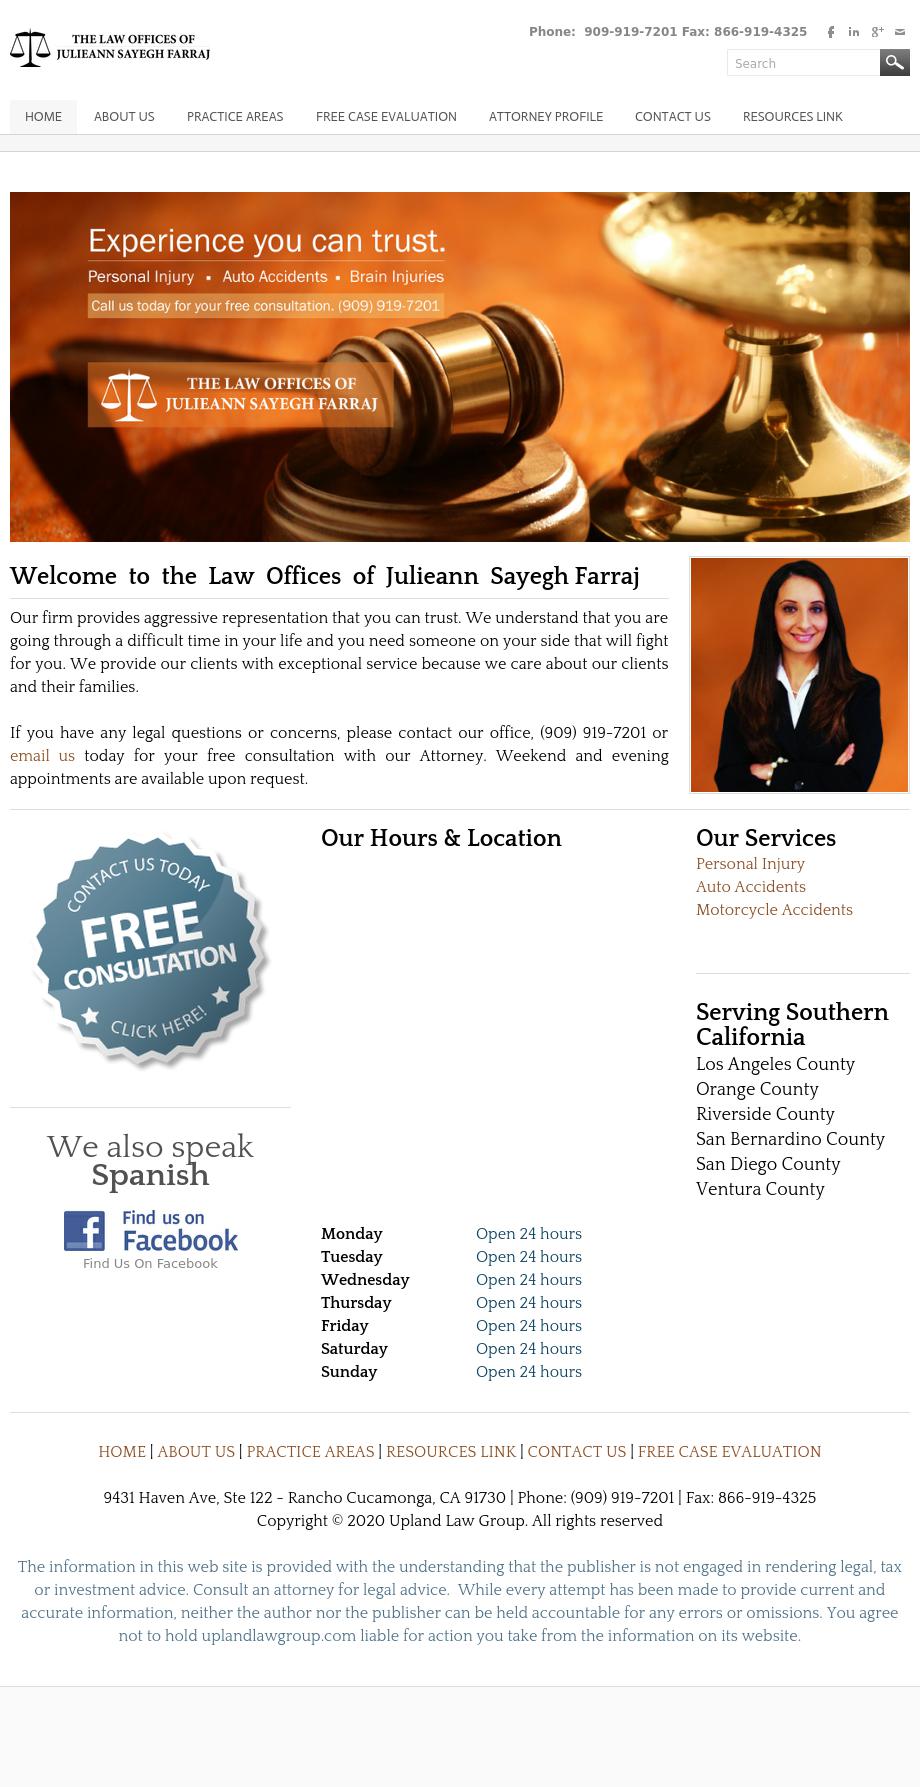 Law offices of Julieann Sayegh Farraj - Upland CA Lawyers